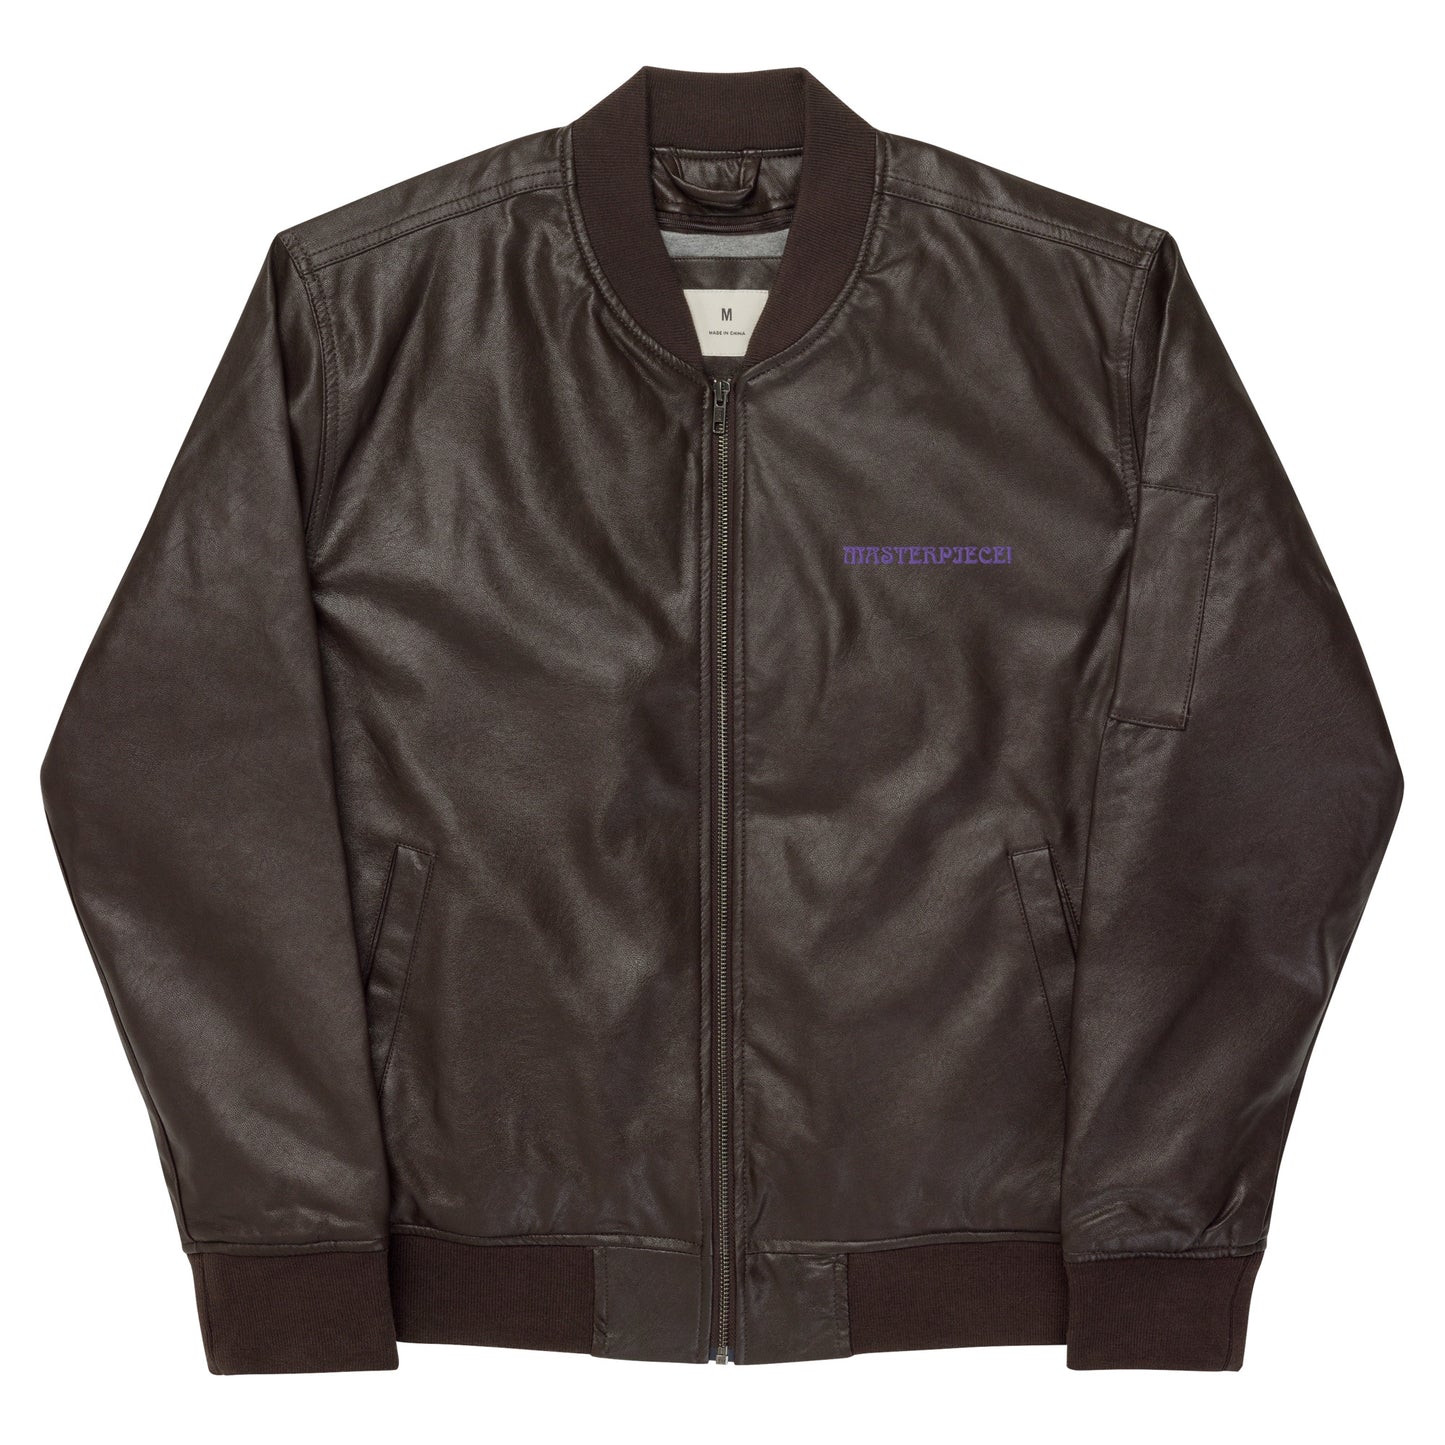 “IAM A MASTERPIECE!"Leather Bomber Jacket W/Purple Font